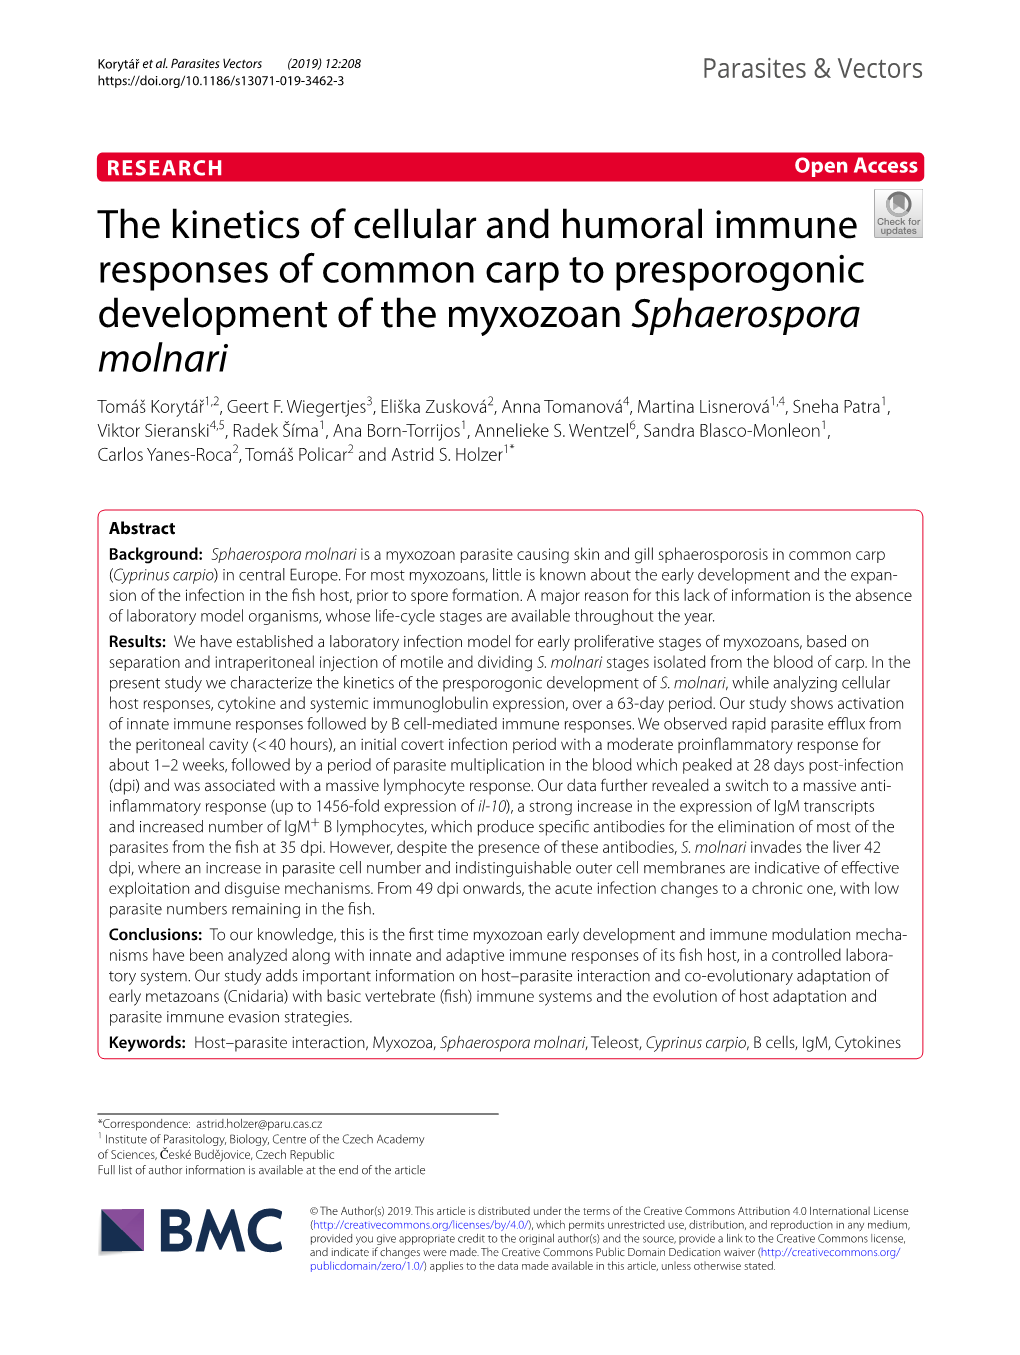 The Kinetics of Cellular and Humoral Immune Responses of Common Carp to Presporogonic Development of the Myxozoan Sphaerospora Molnari Tomáš Korytář1,2, Geert F